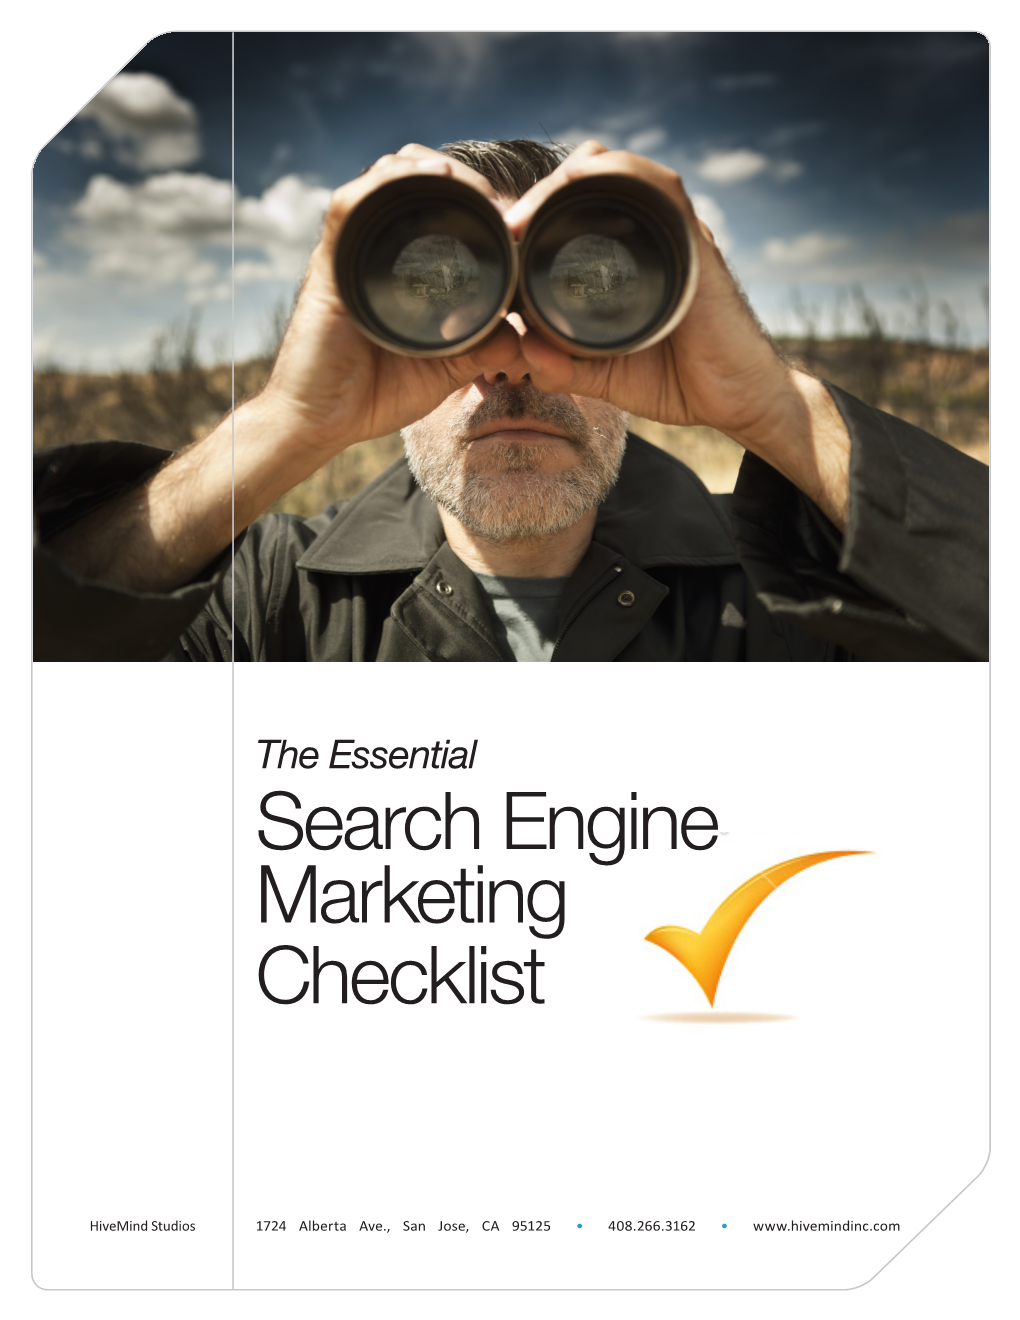 Search Engine Marketing Checklist